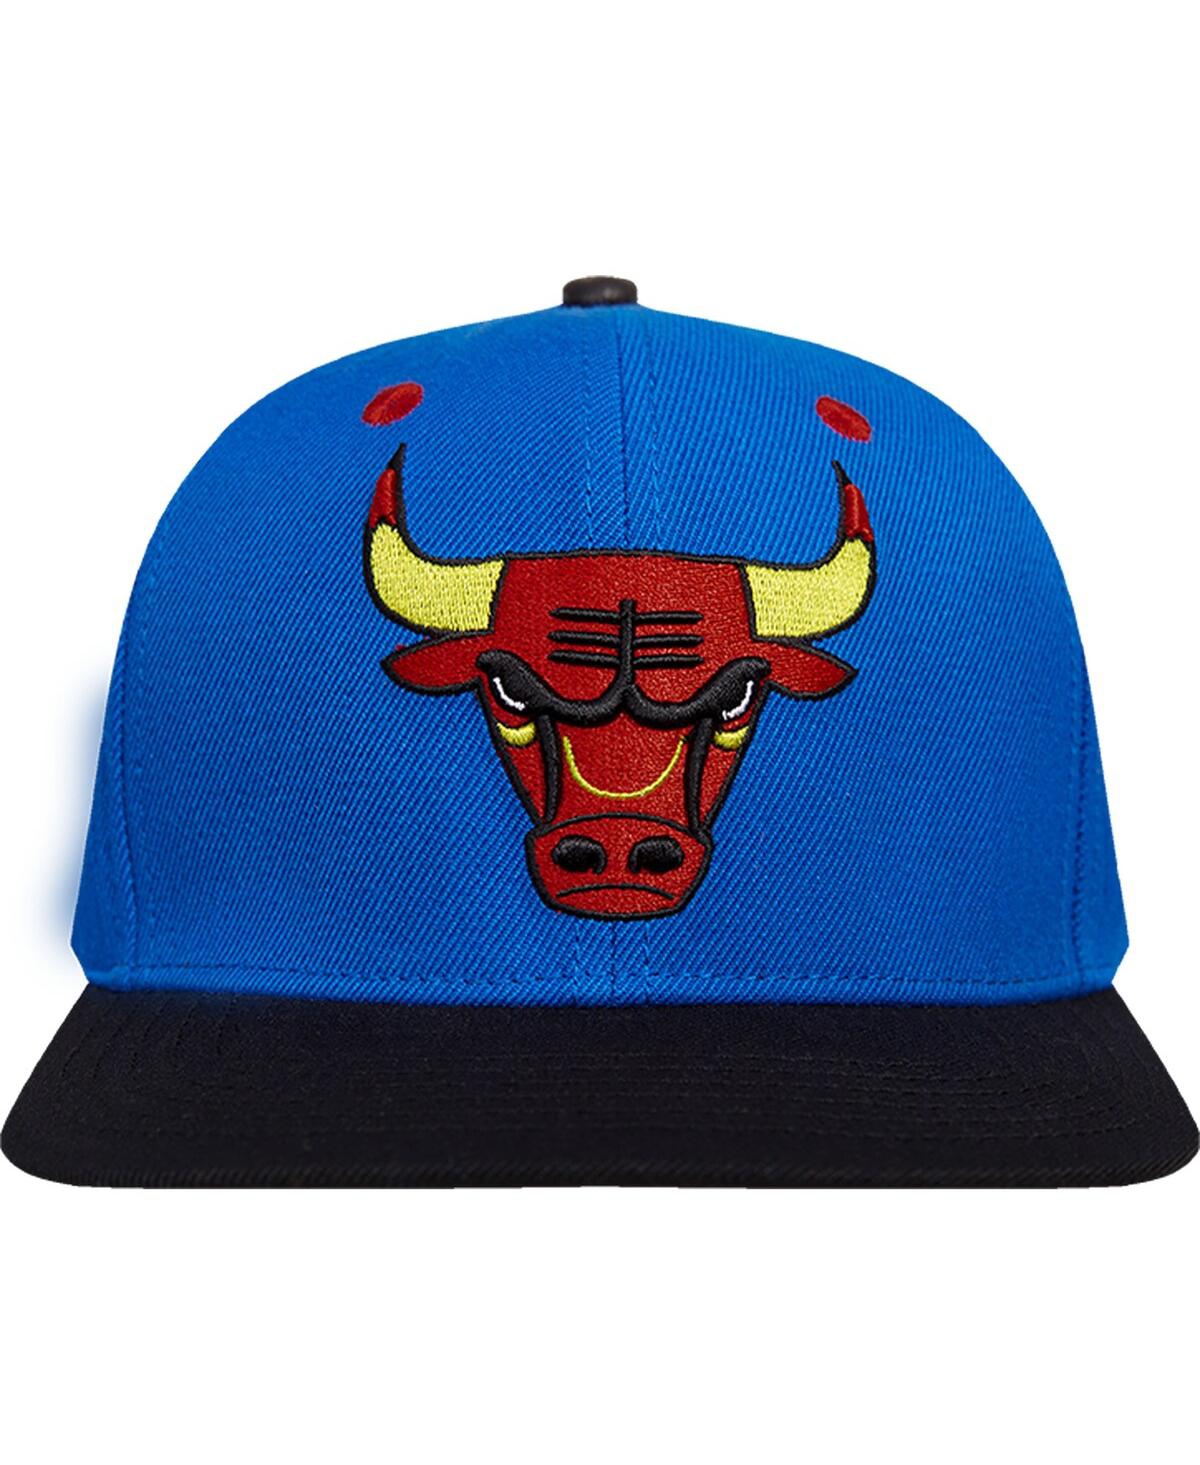 Shop Pro Standard Men's  Royal Chicago Bulls Any Condition Snapback Hat